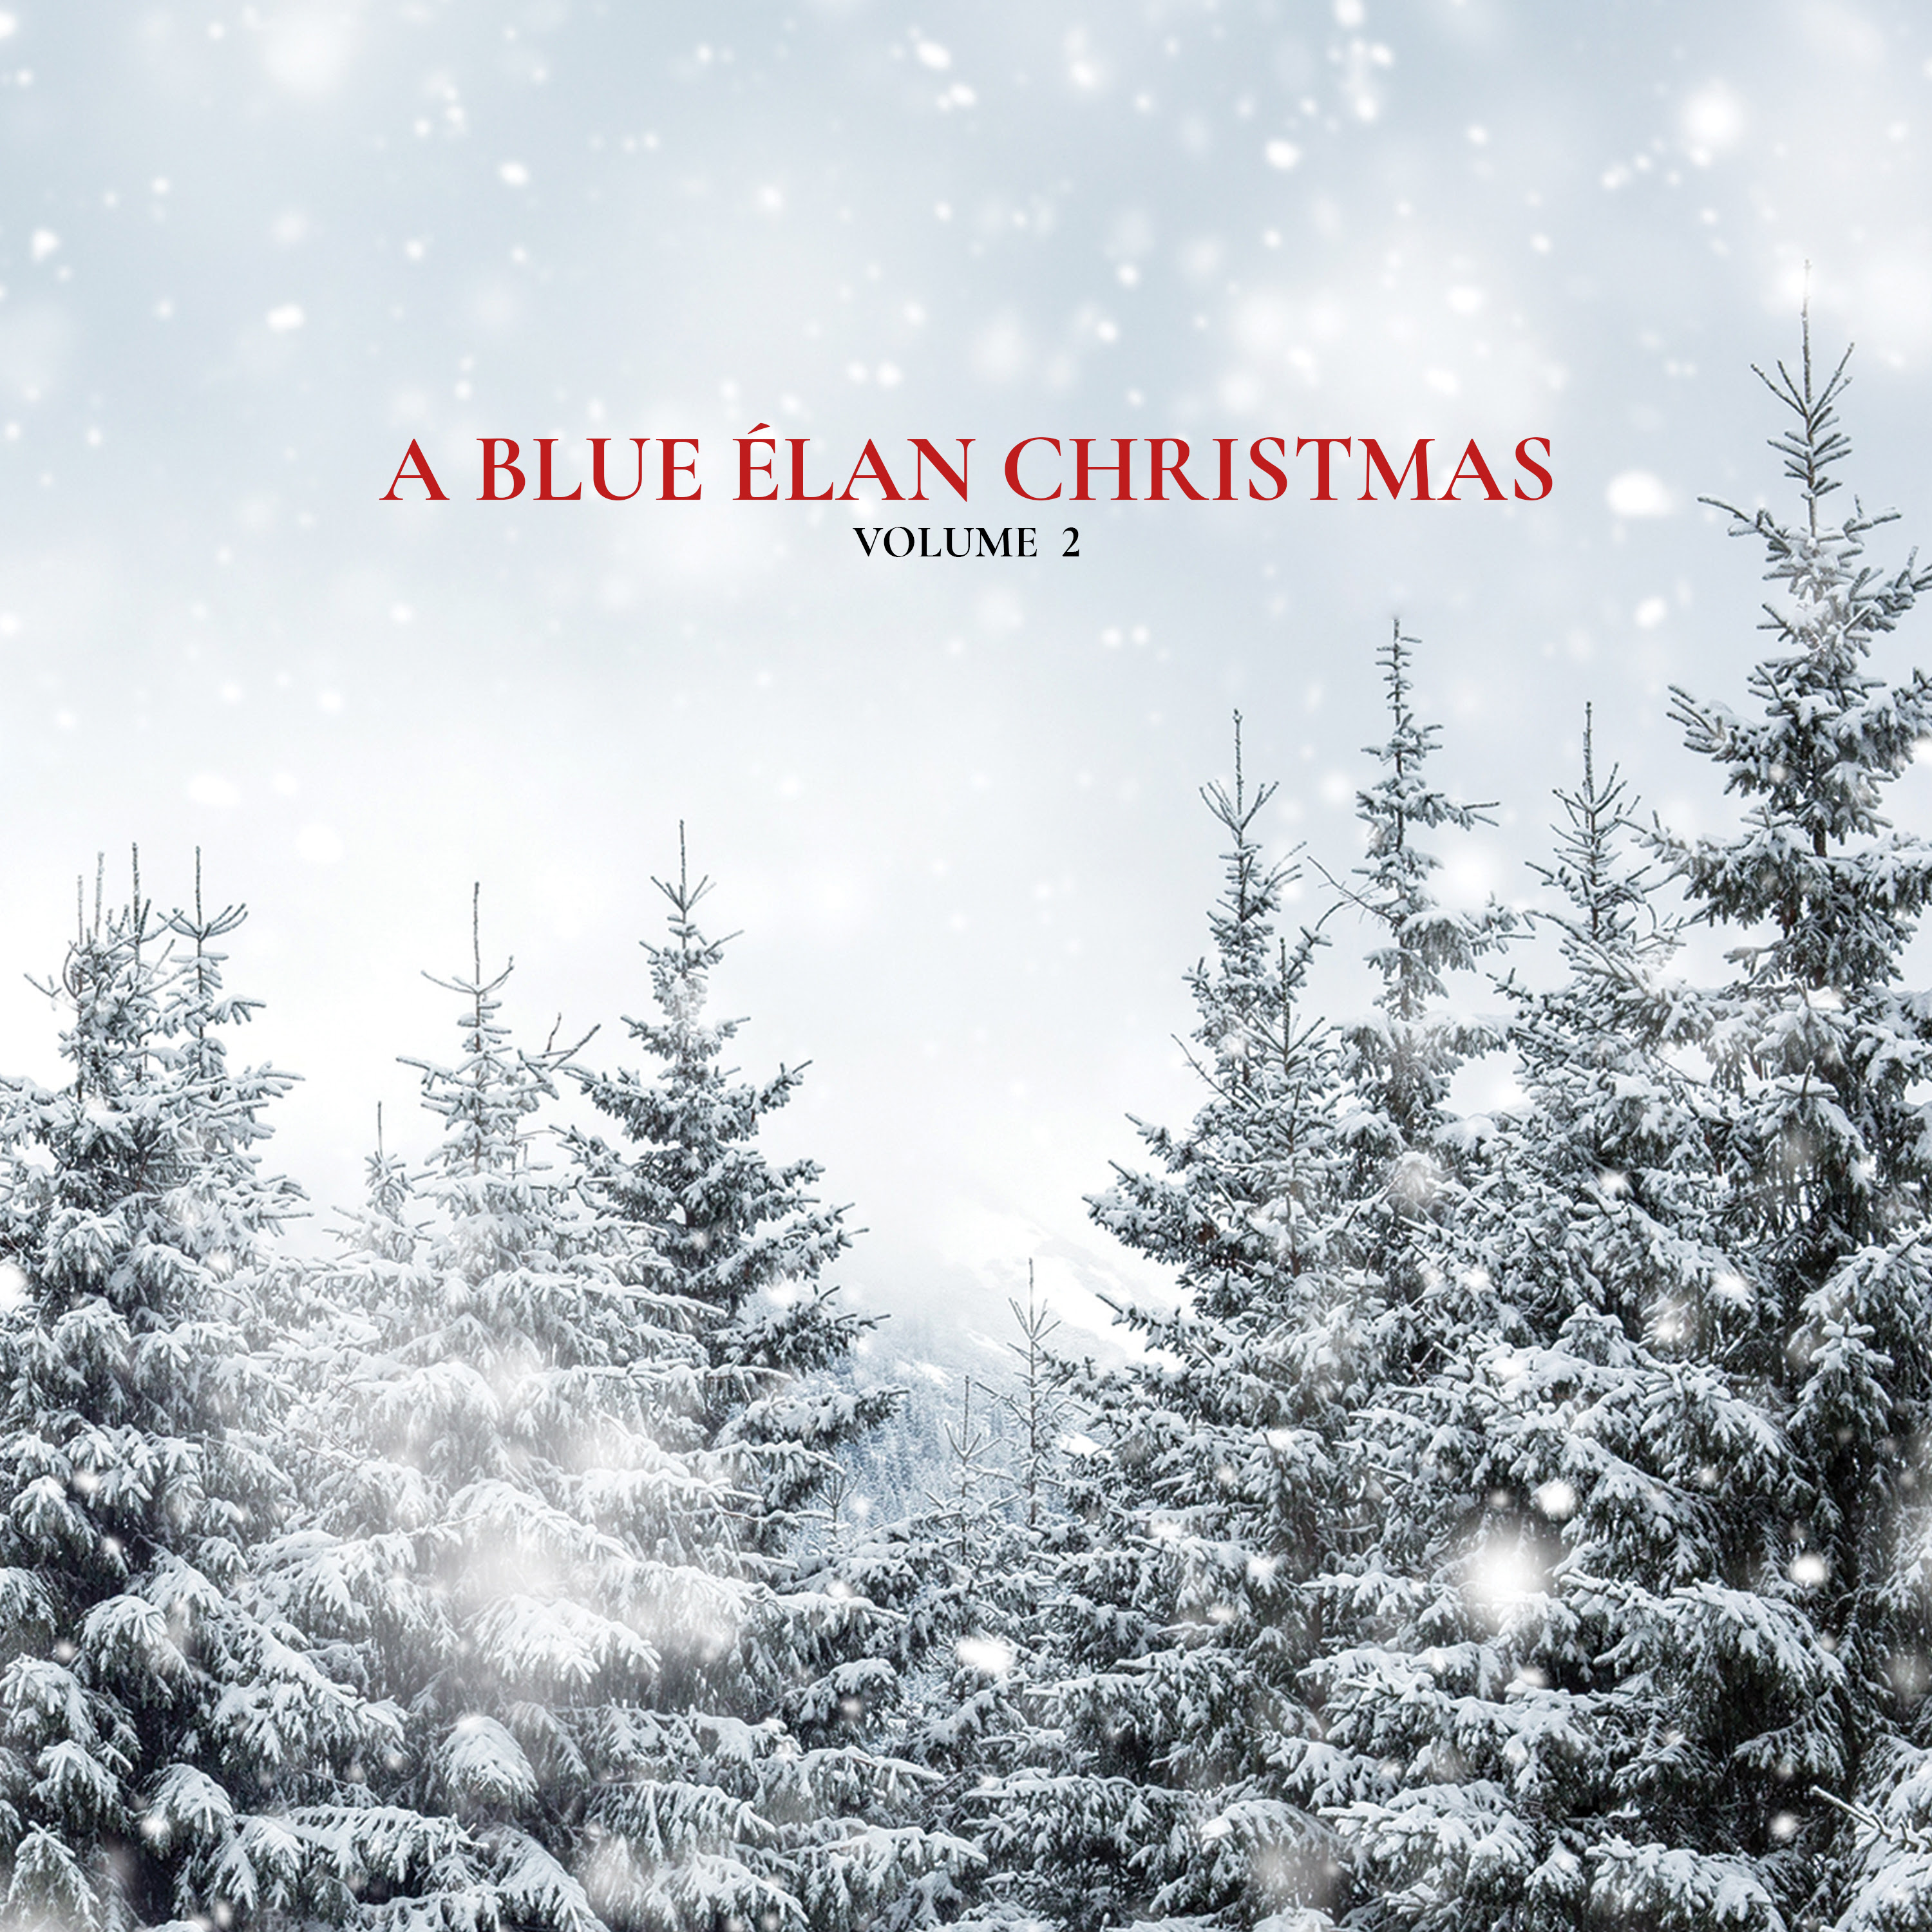 Blue Élan Records Gets Into The Holiday Spirit with "A Blue Élan Christmas: Volume 2"